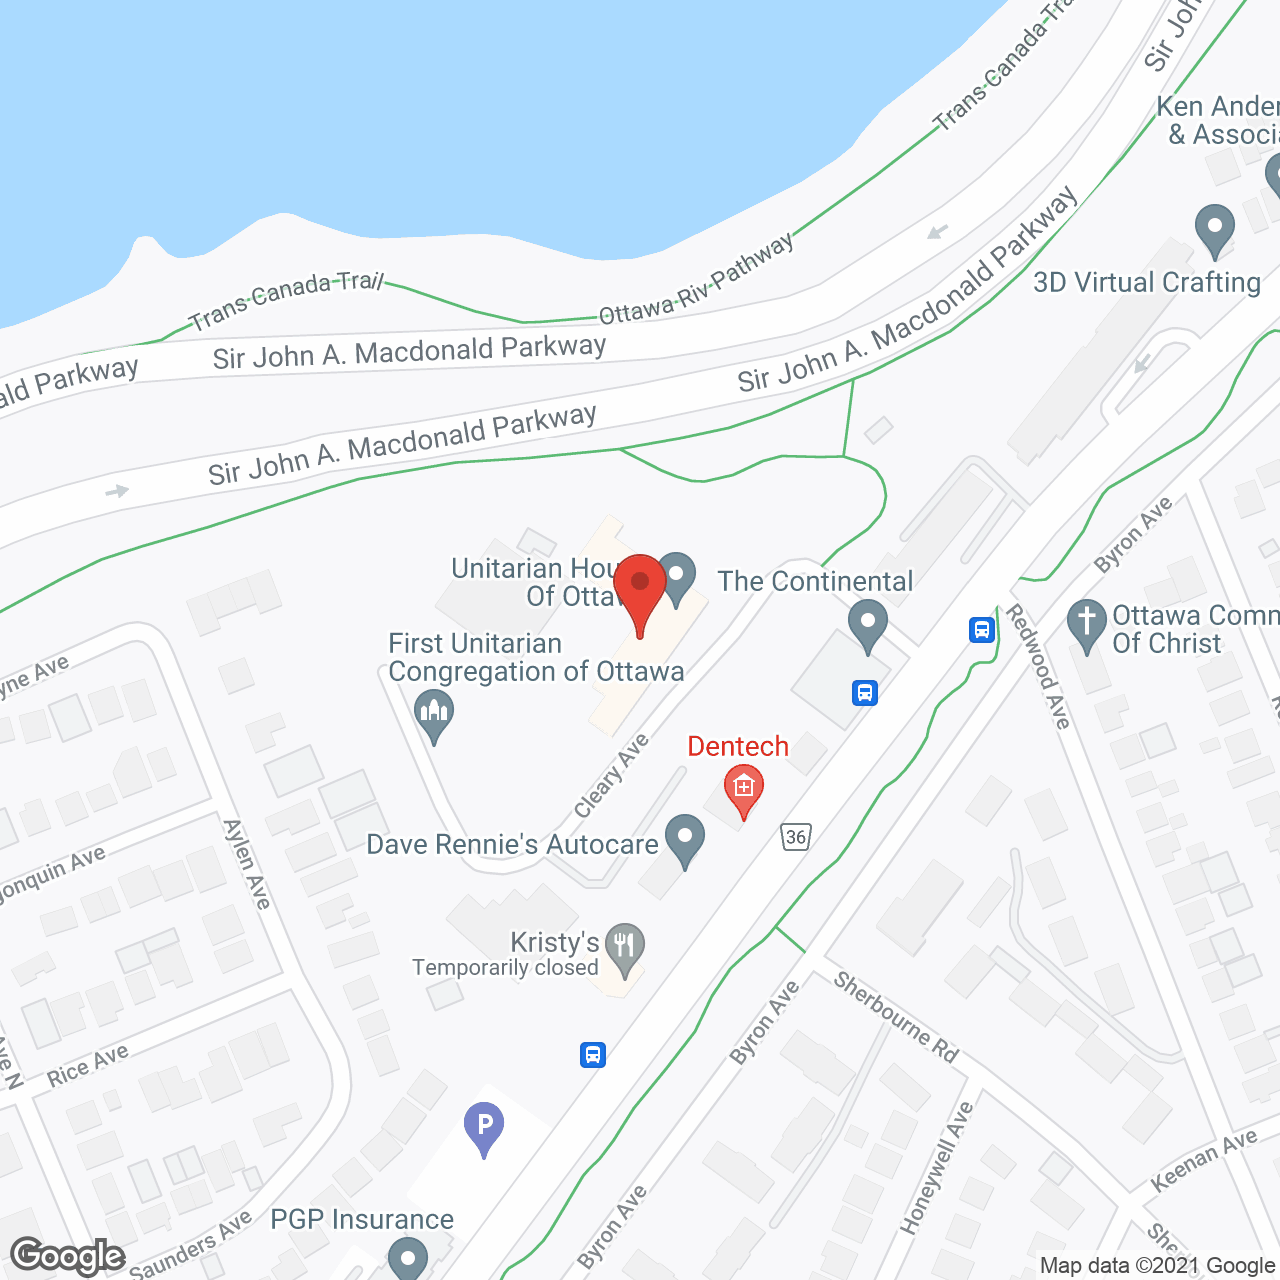 Unitarian House of Ottawa in google map